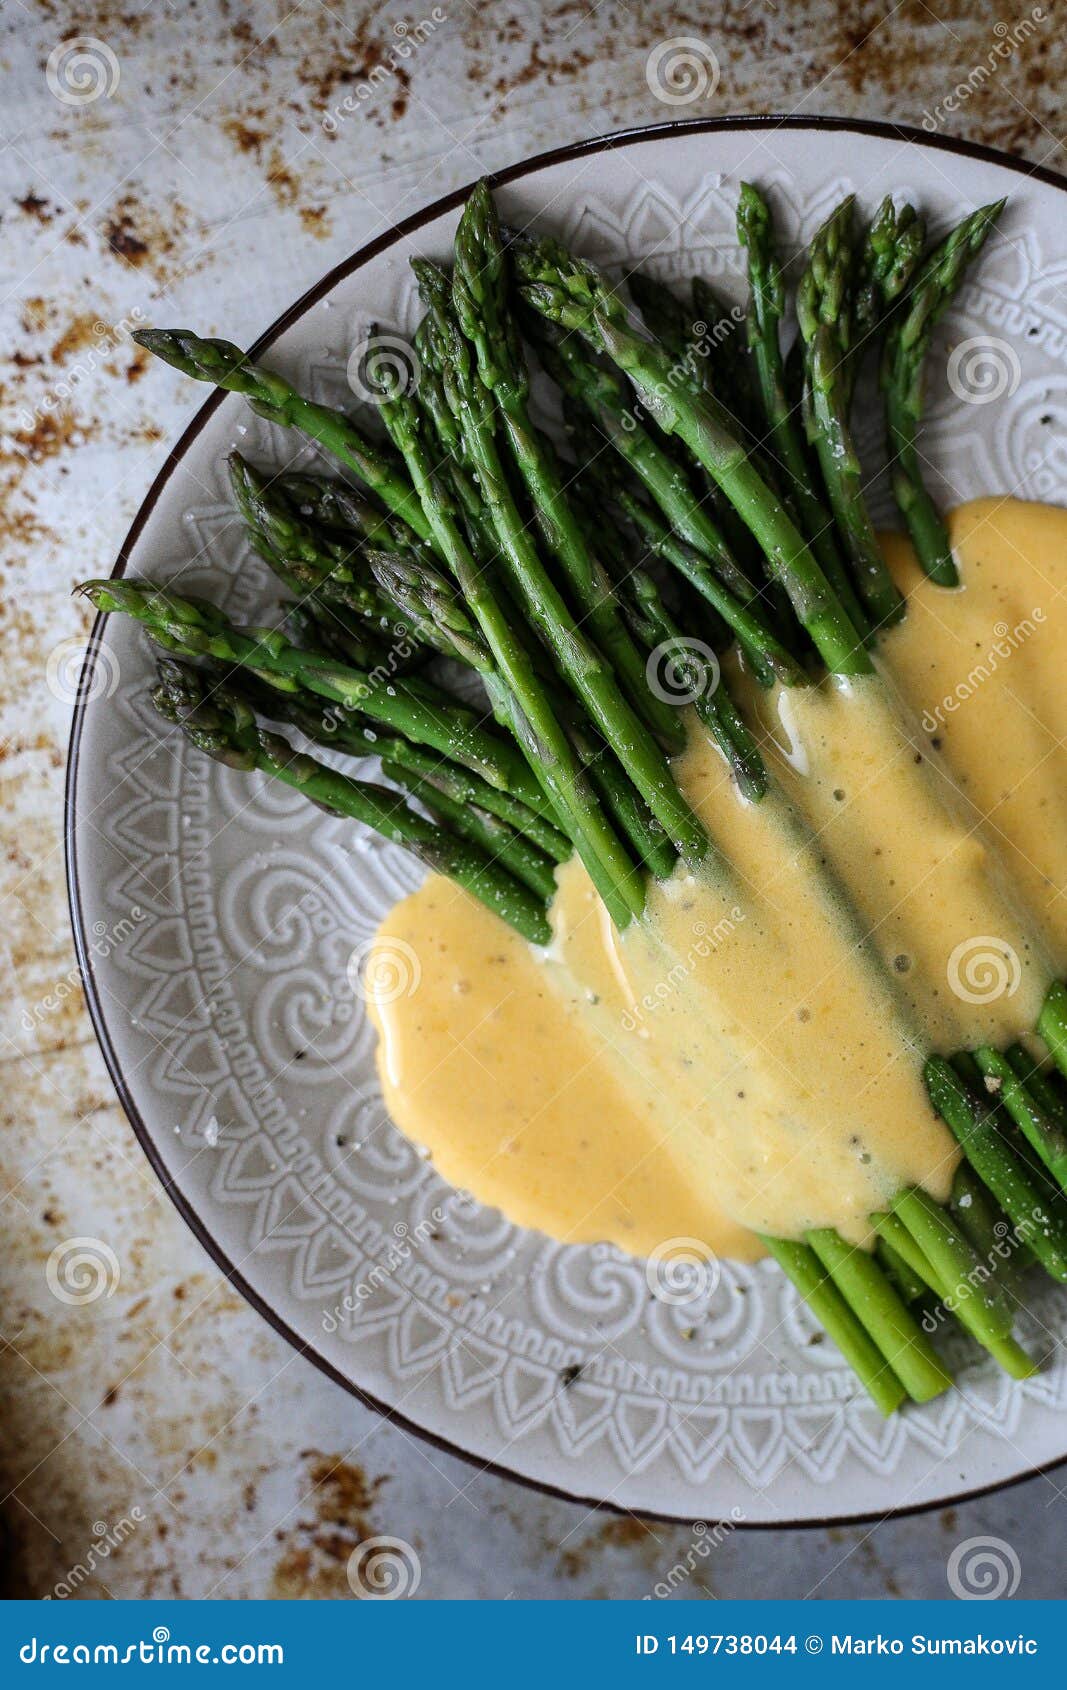 asparagus in homemade hollandaise sauce